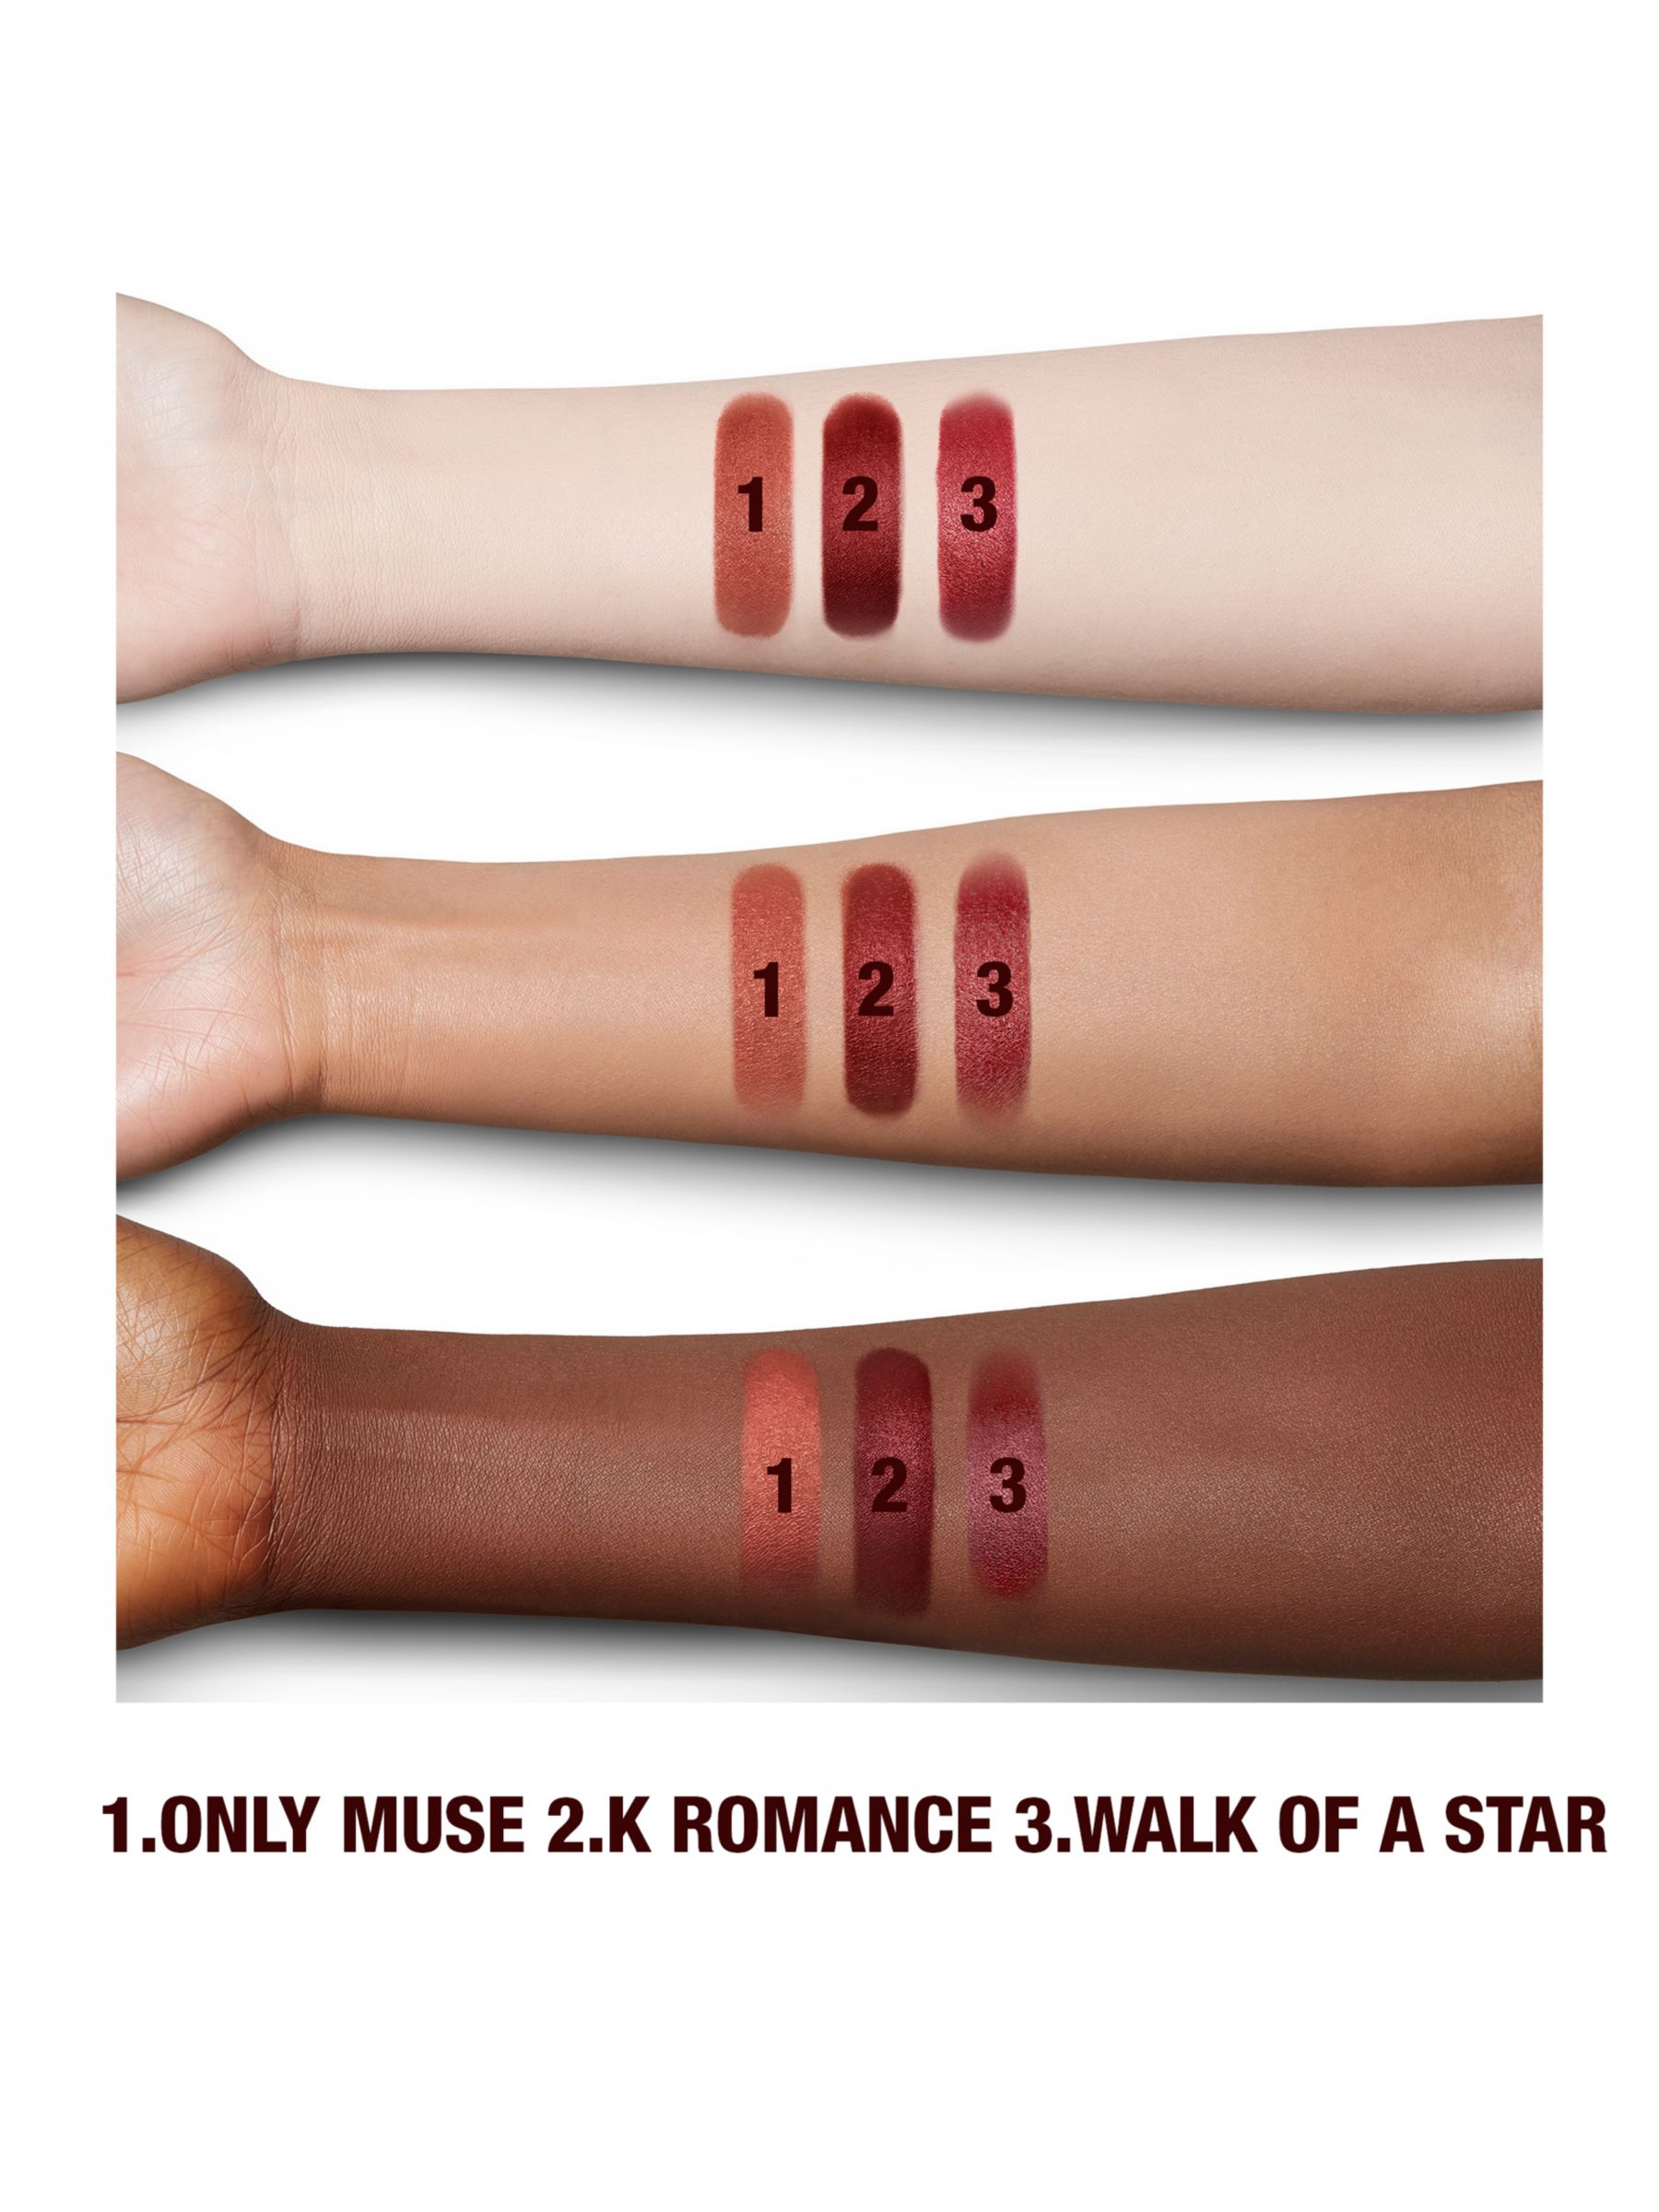 Charlotte Tilbury Lunar New Year Lipsticks Matte Revolution, K-Romance 5